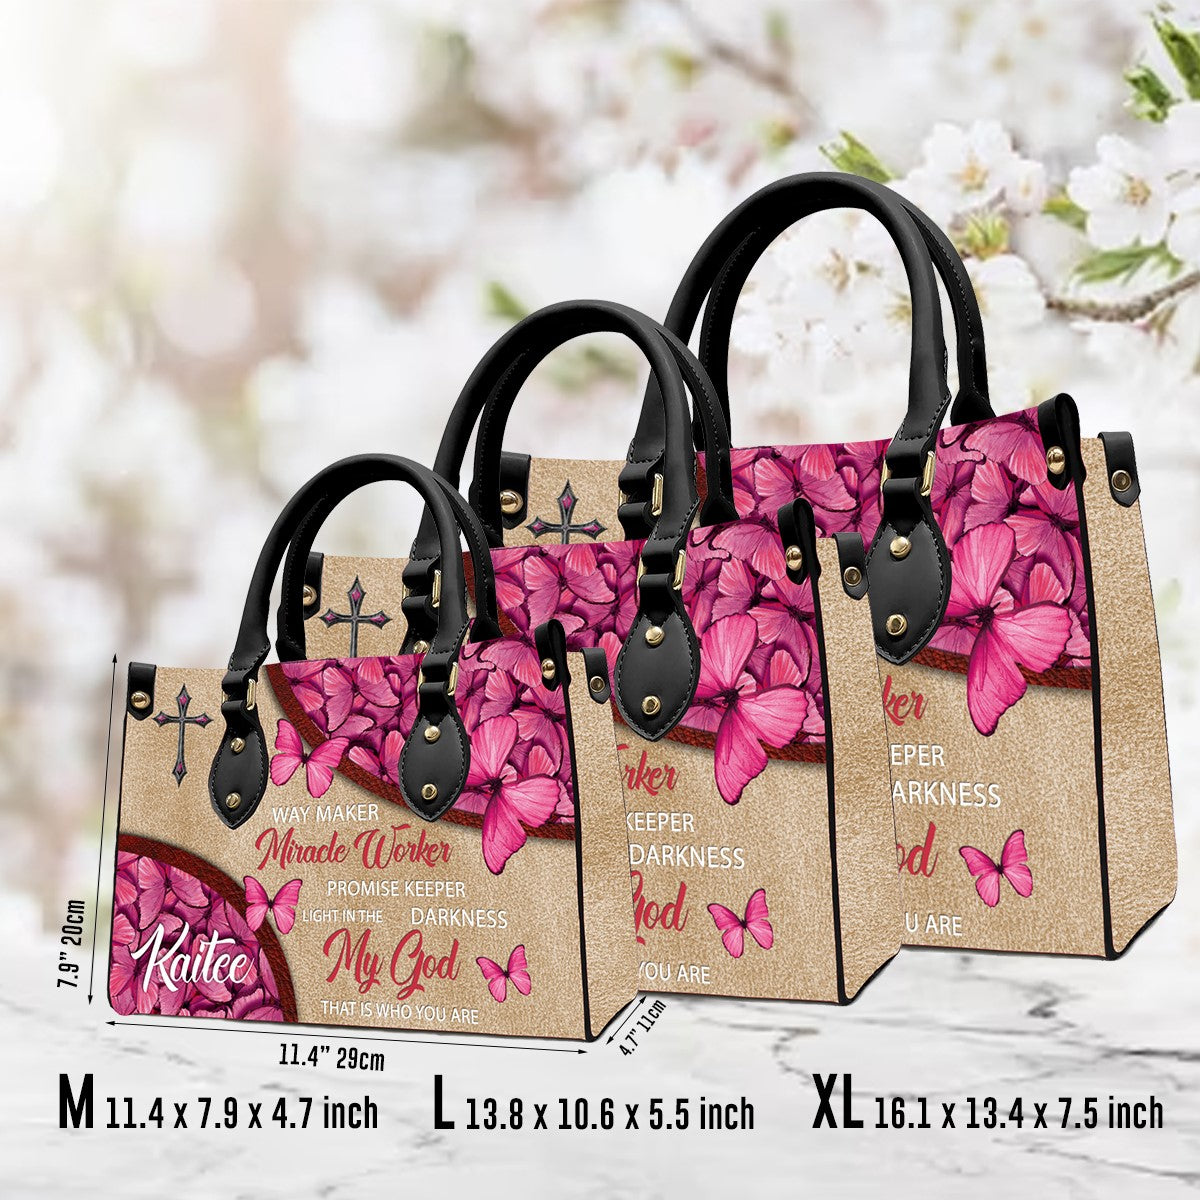 Christianartbag Handbags, Way Maker Miracle Worker Leather Handbag, Butterfly Pink Leather Handbag, Gifts for Women, CABLTB01311023. - Christian Art Bag